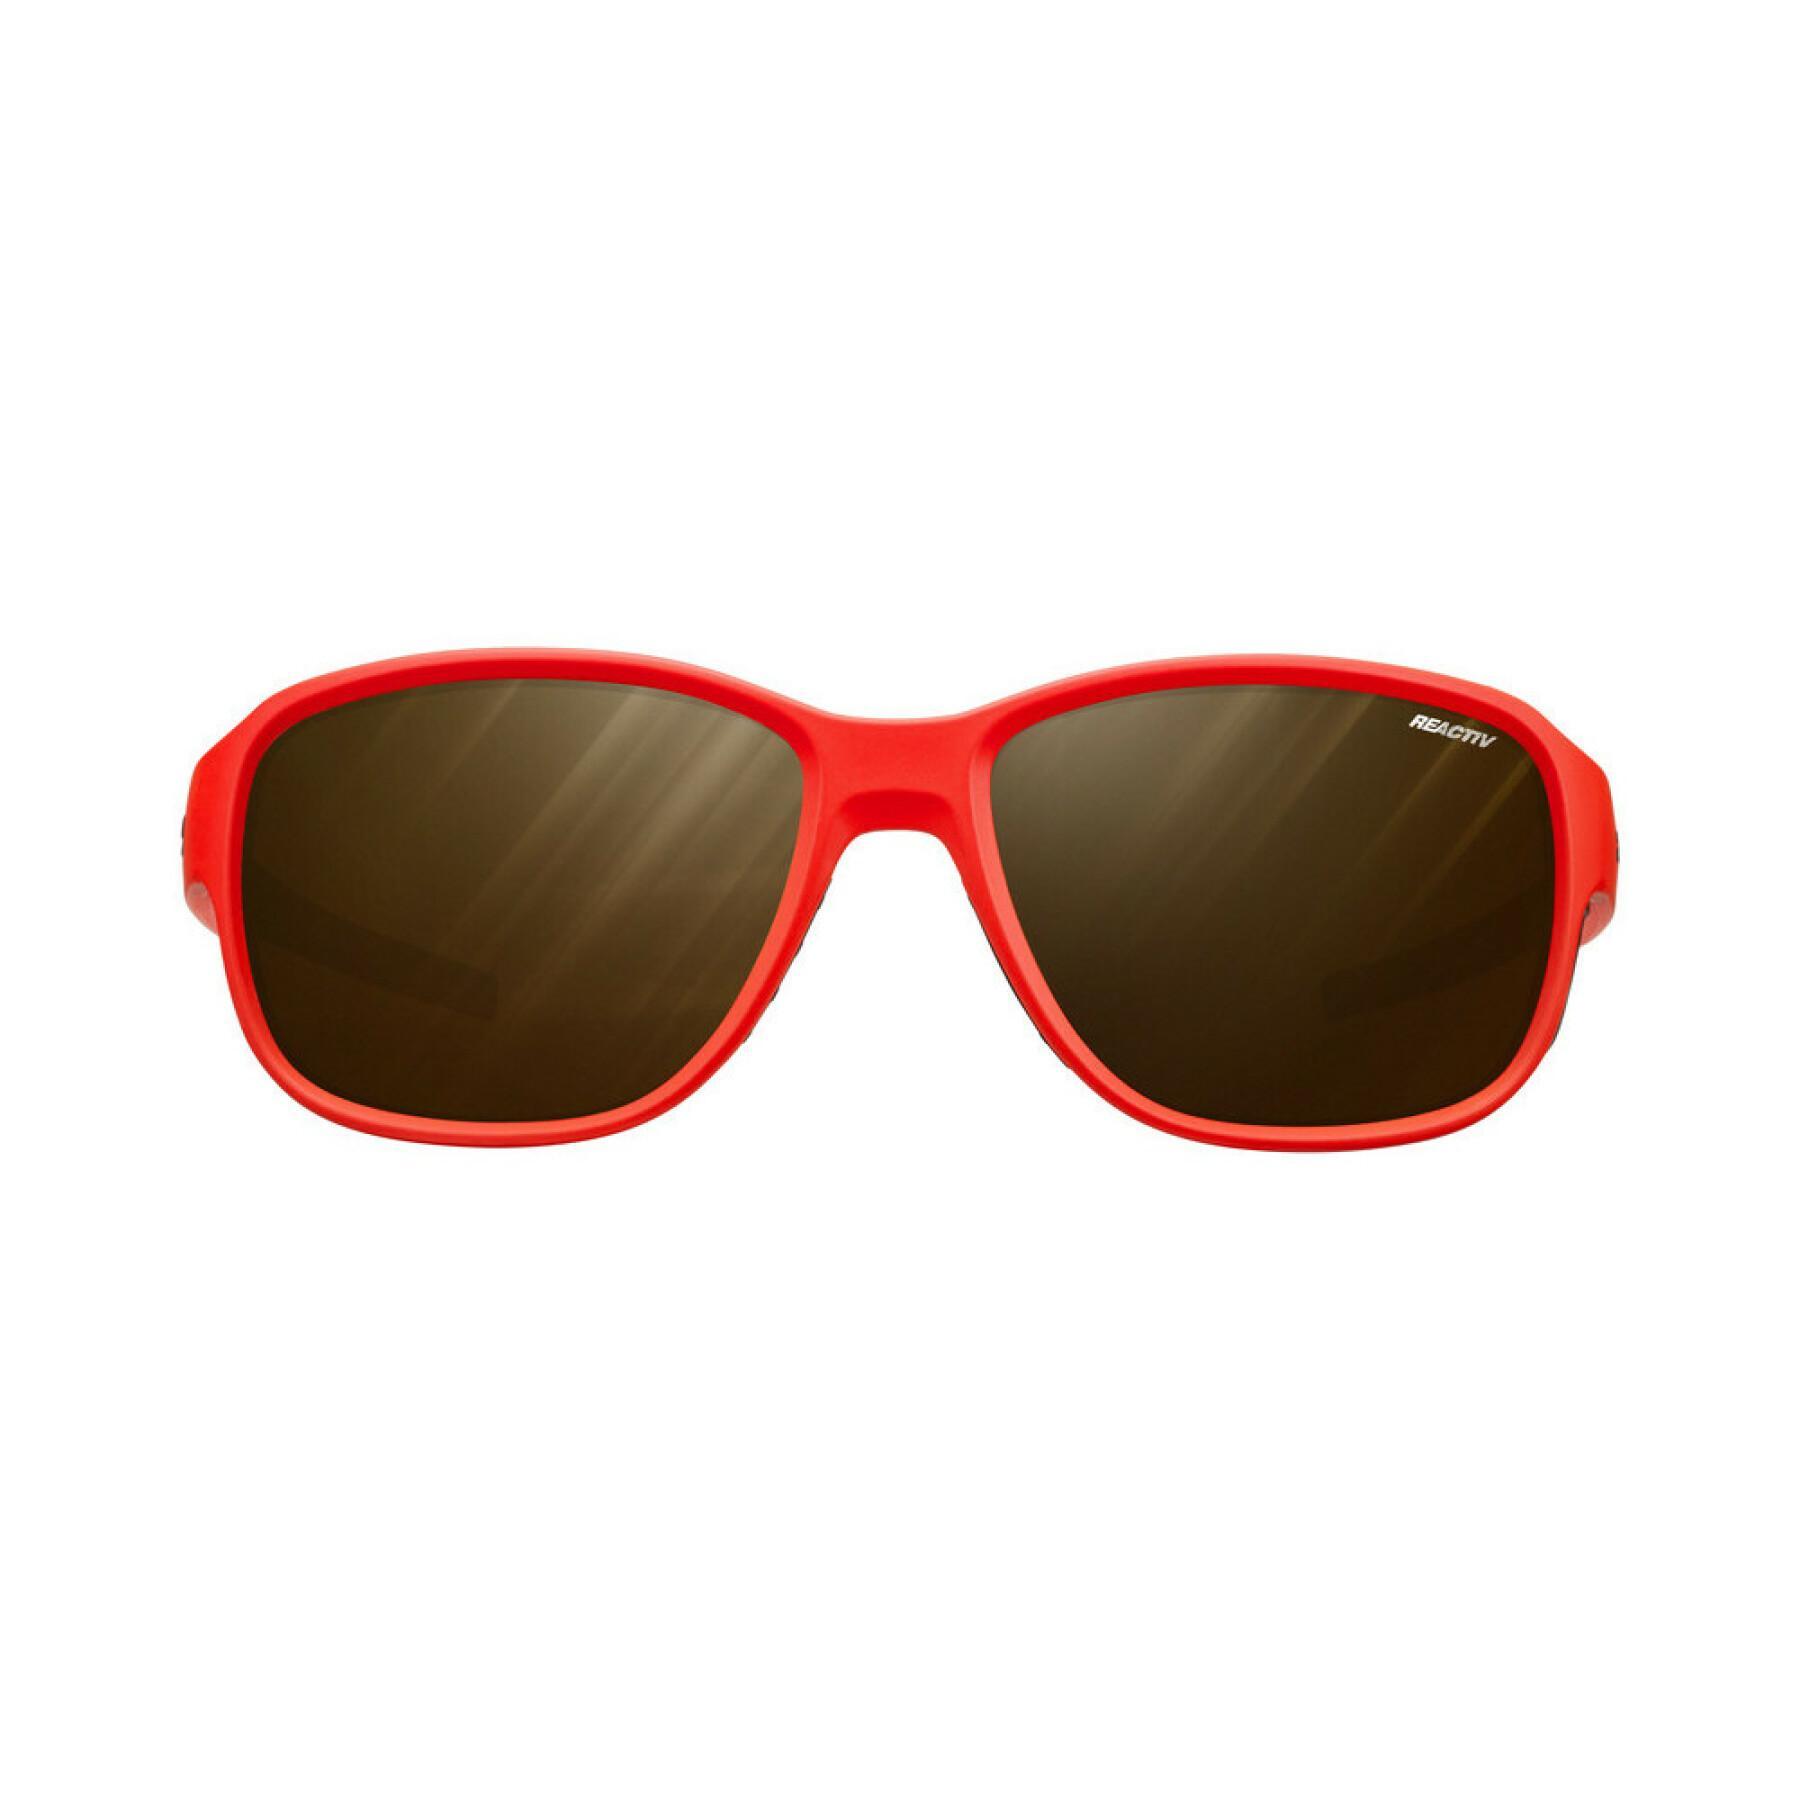 Polarized sunglasses Julbo Montebianco 2 Reactiv 2-4